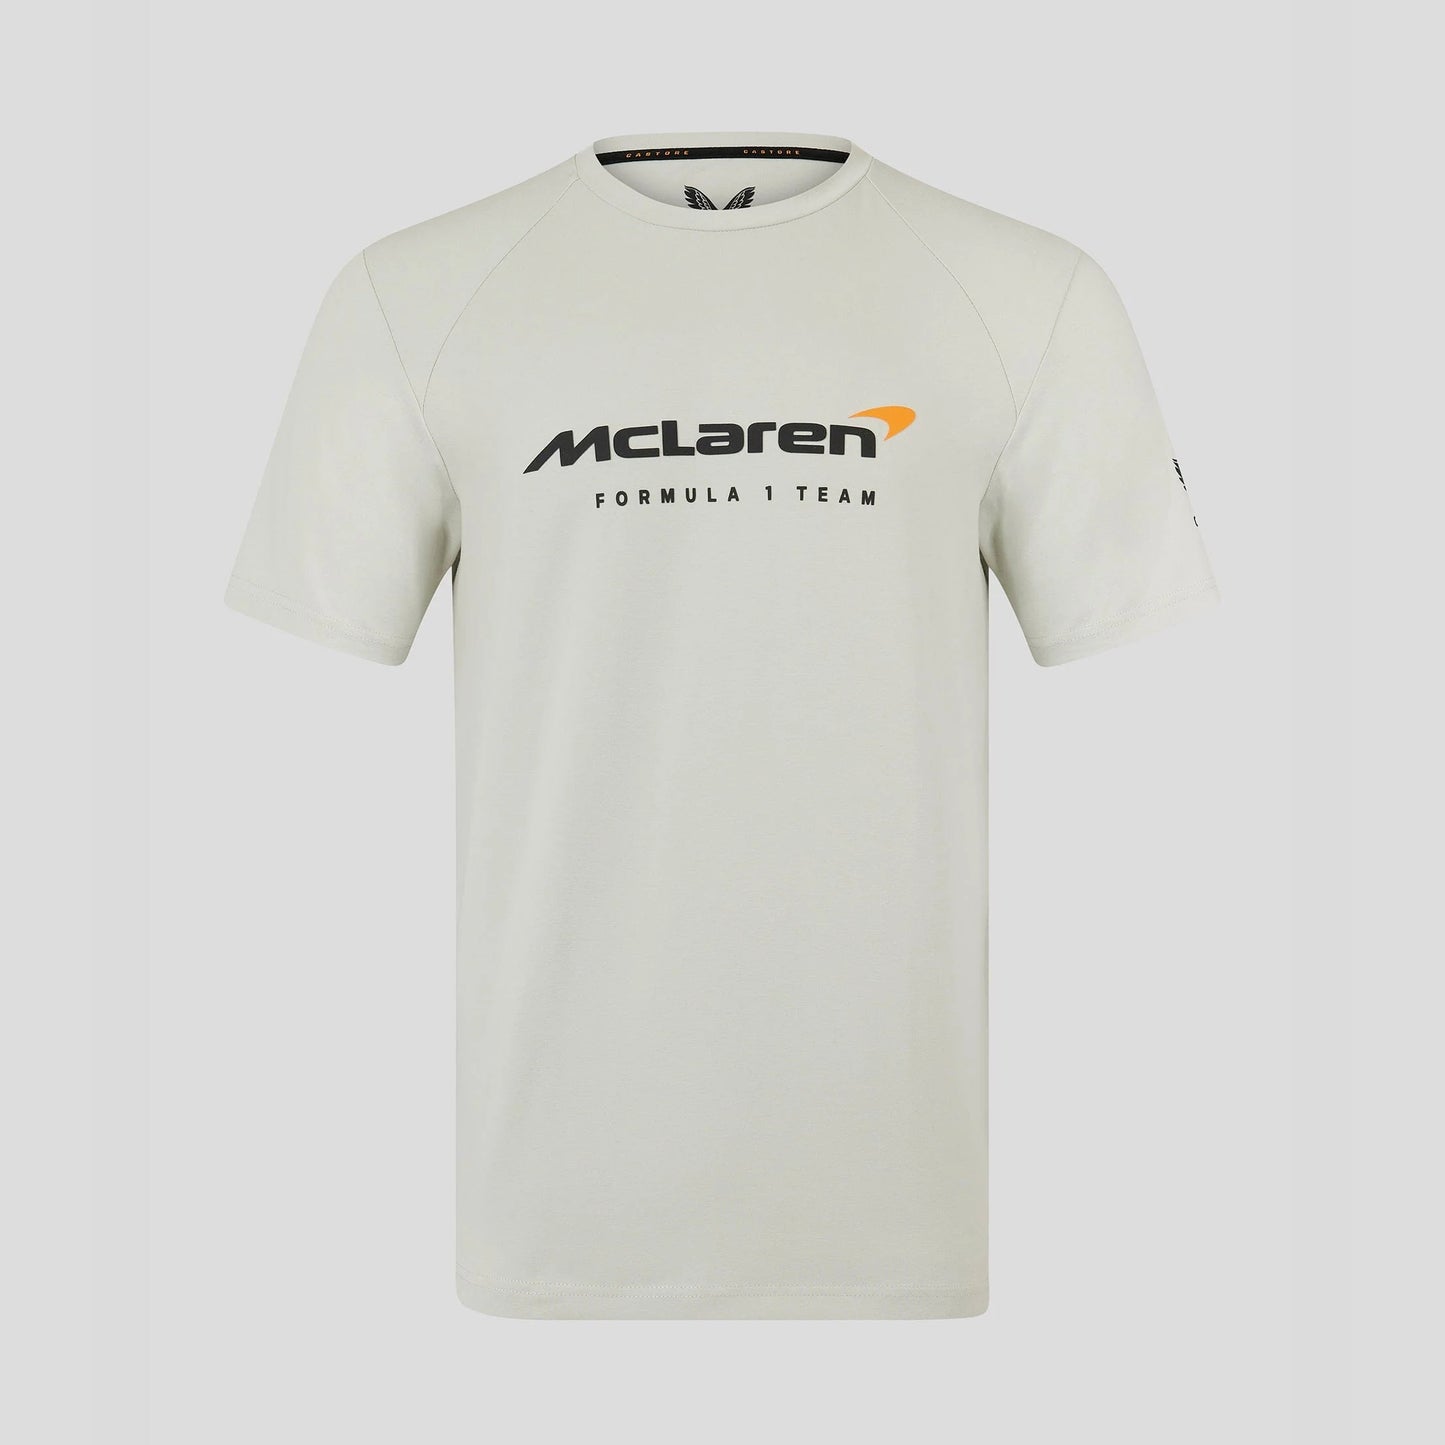 McLaren F1 Men's Lifestyle T-Shirt Light Gray